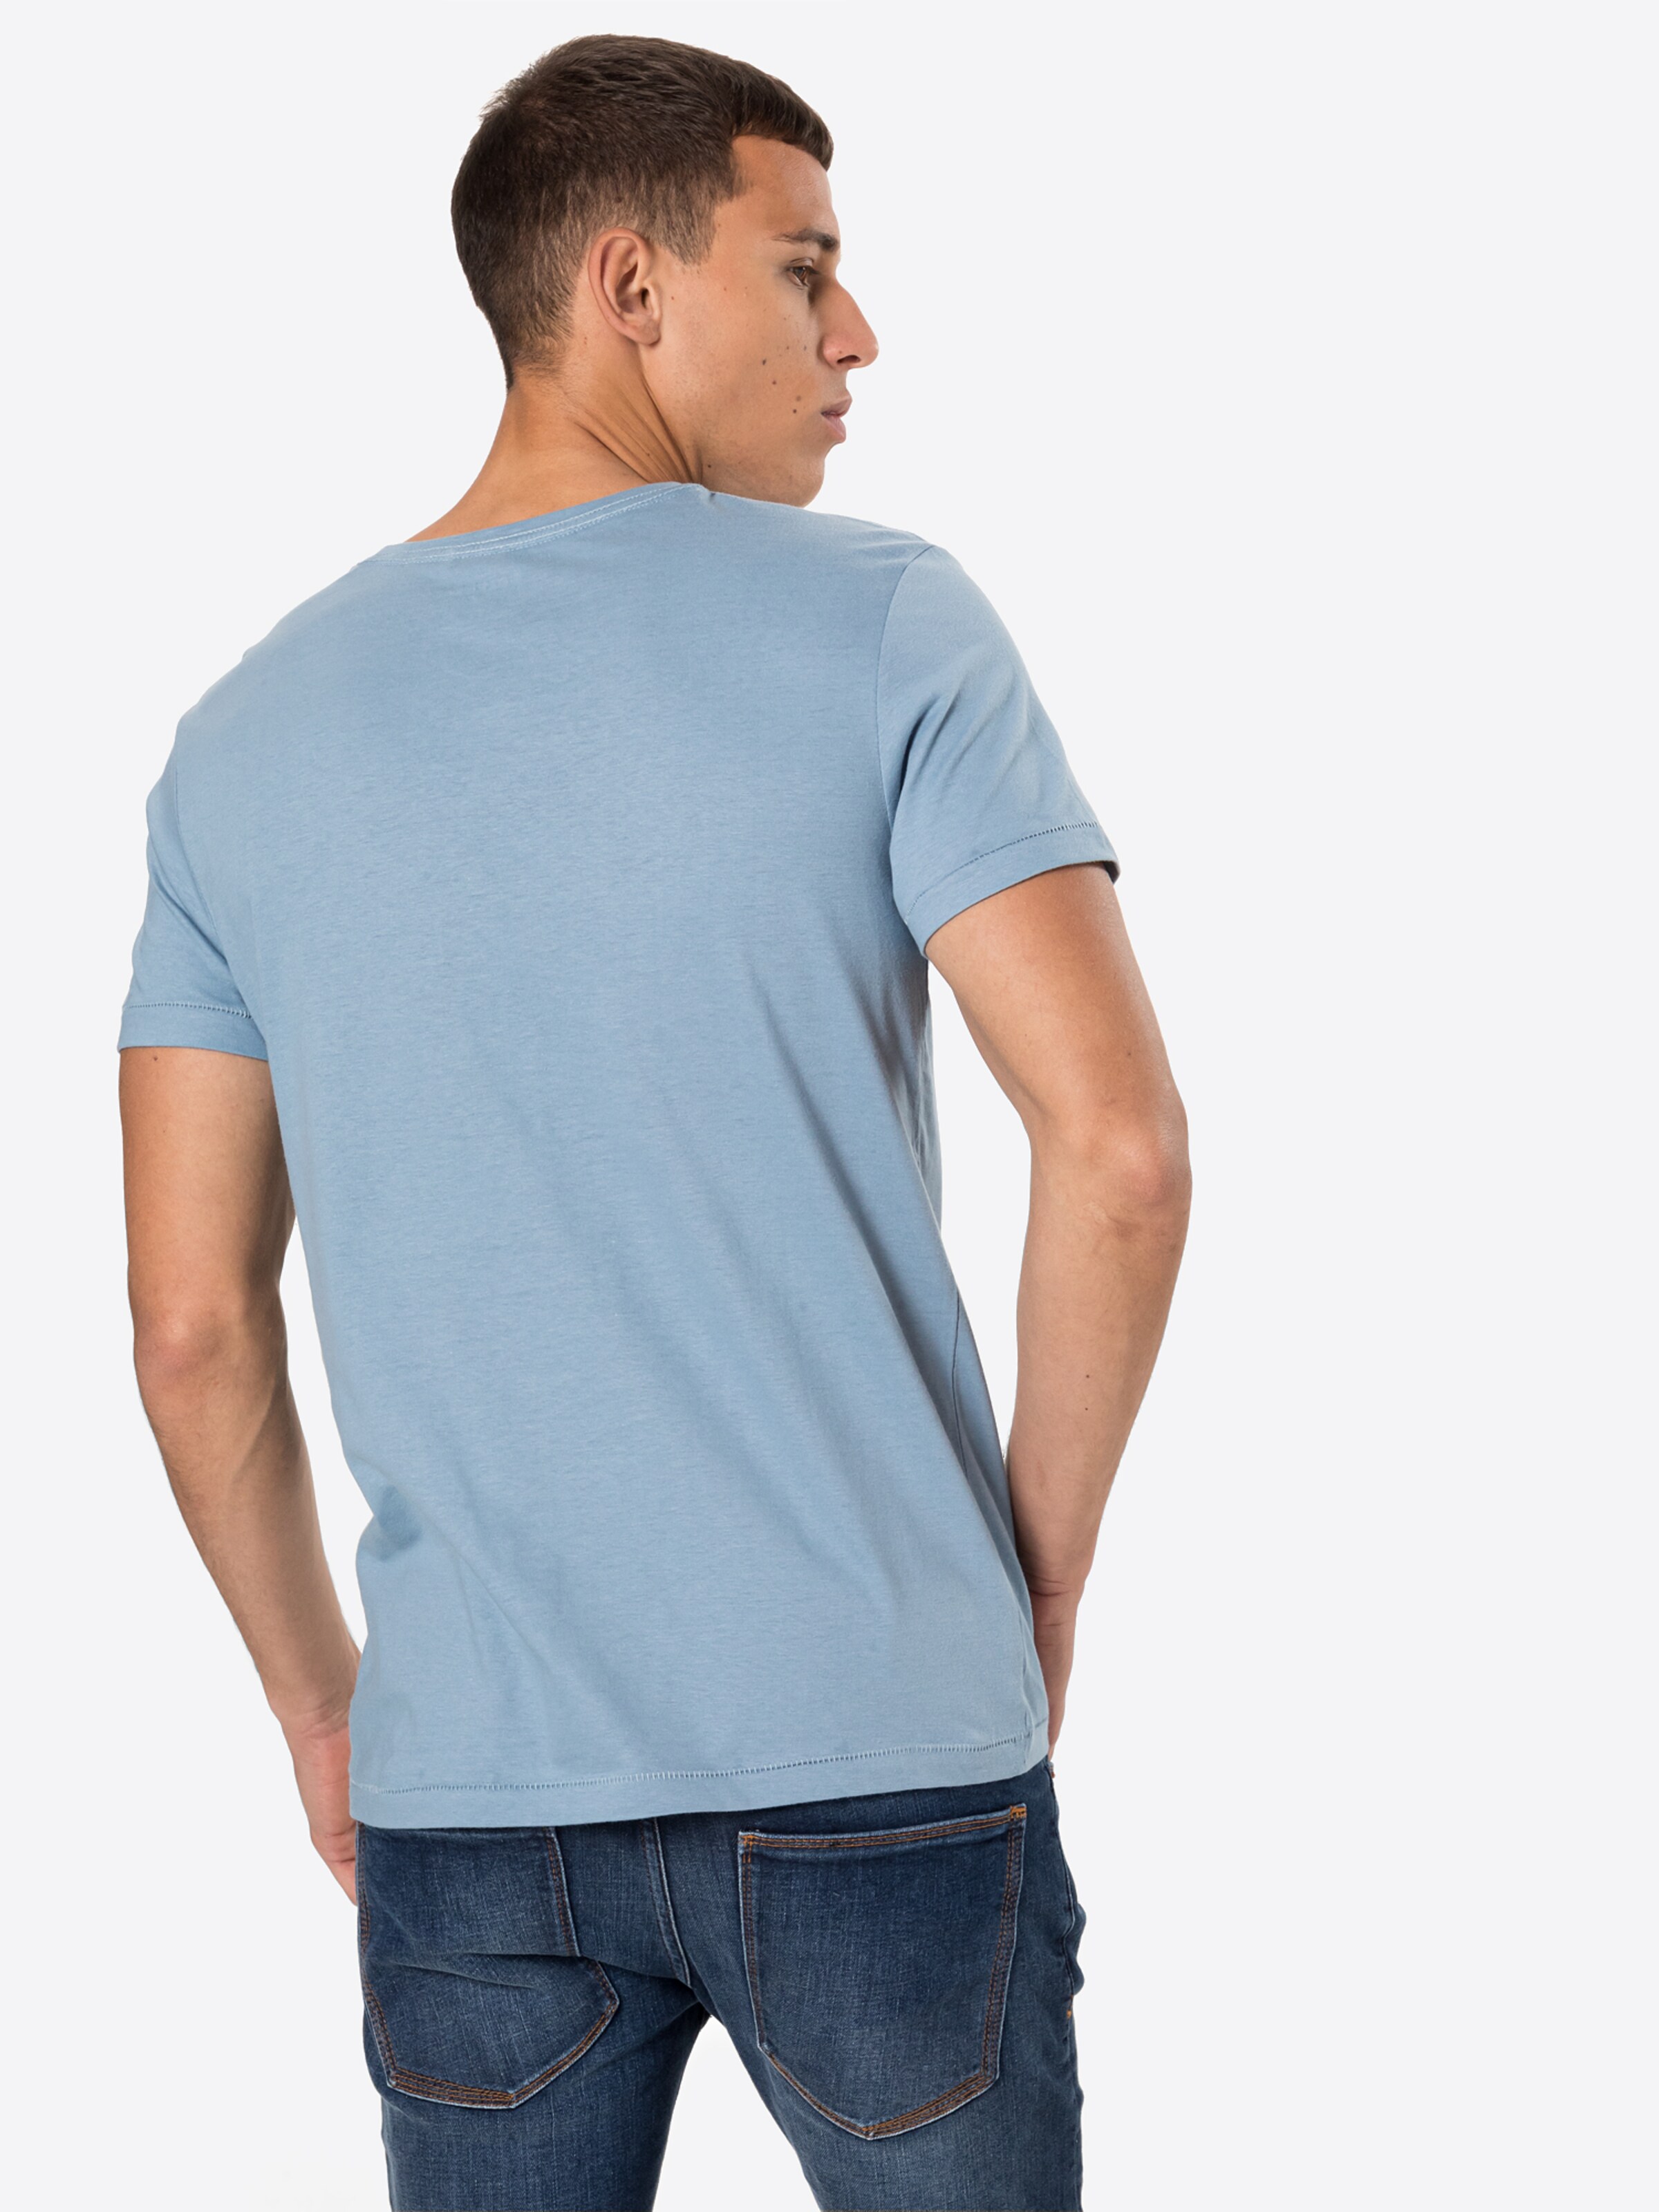 Männer Shirts BLEND T-Shirt in Blau, Taubenblau - DZ76890